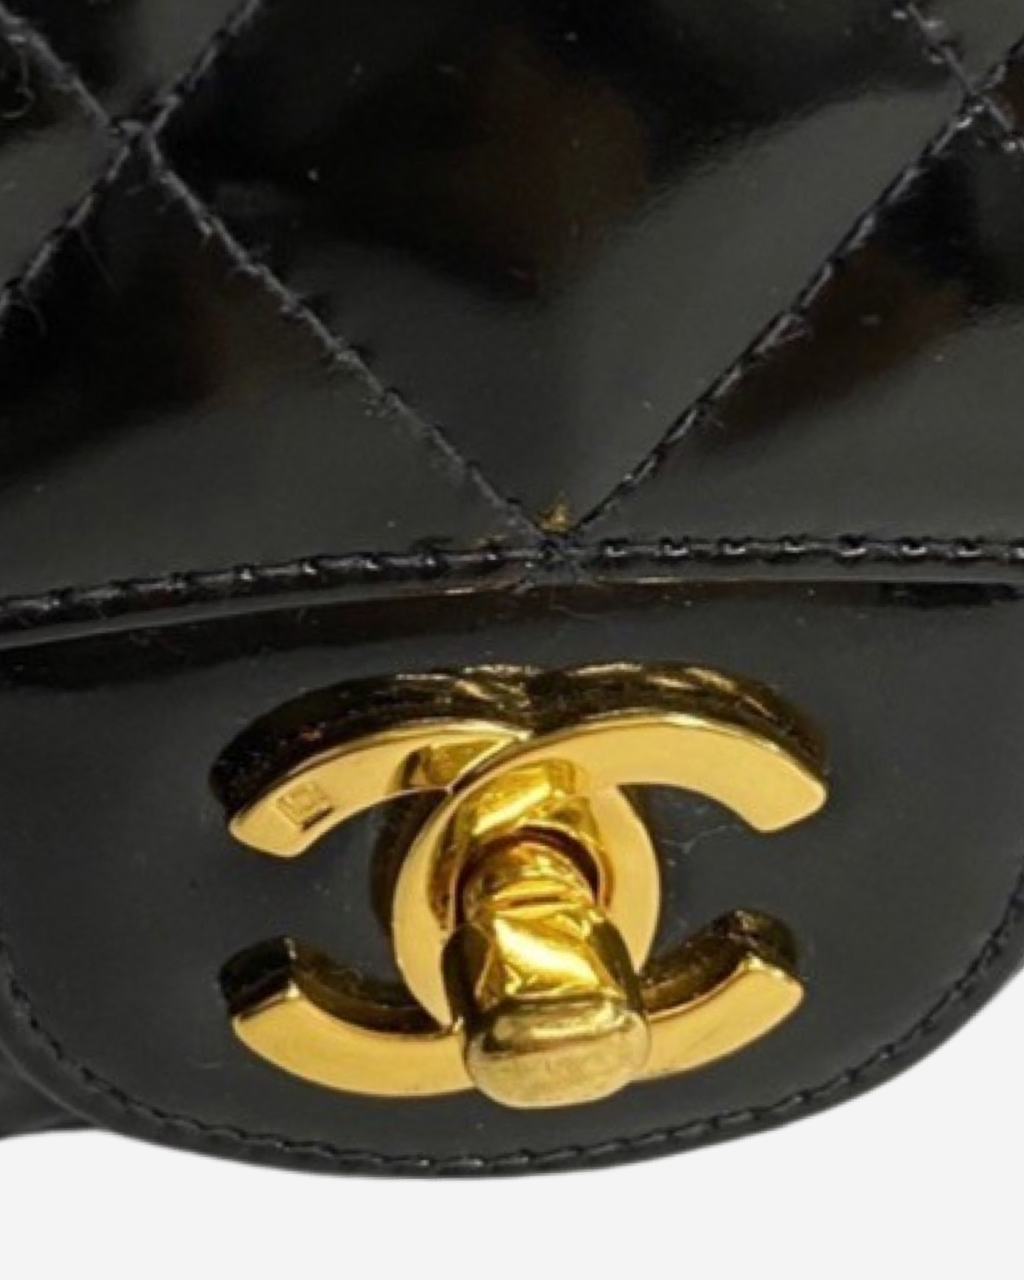 Bolsa Chanel Double Sided Flap